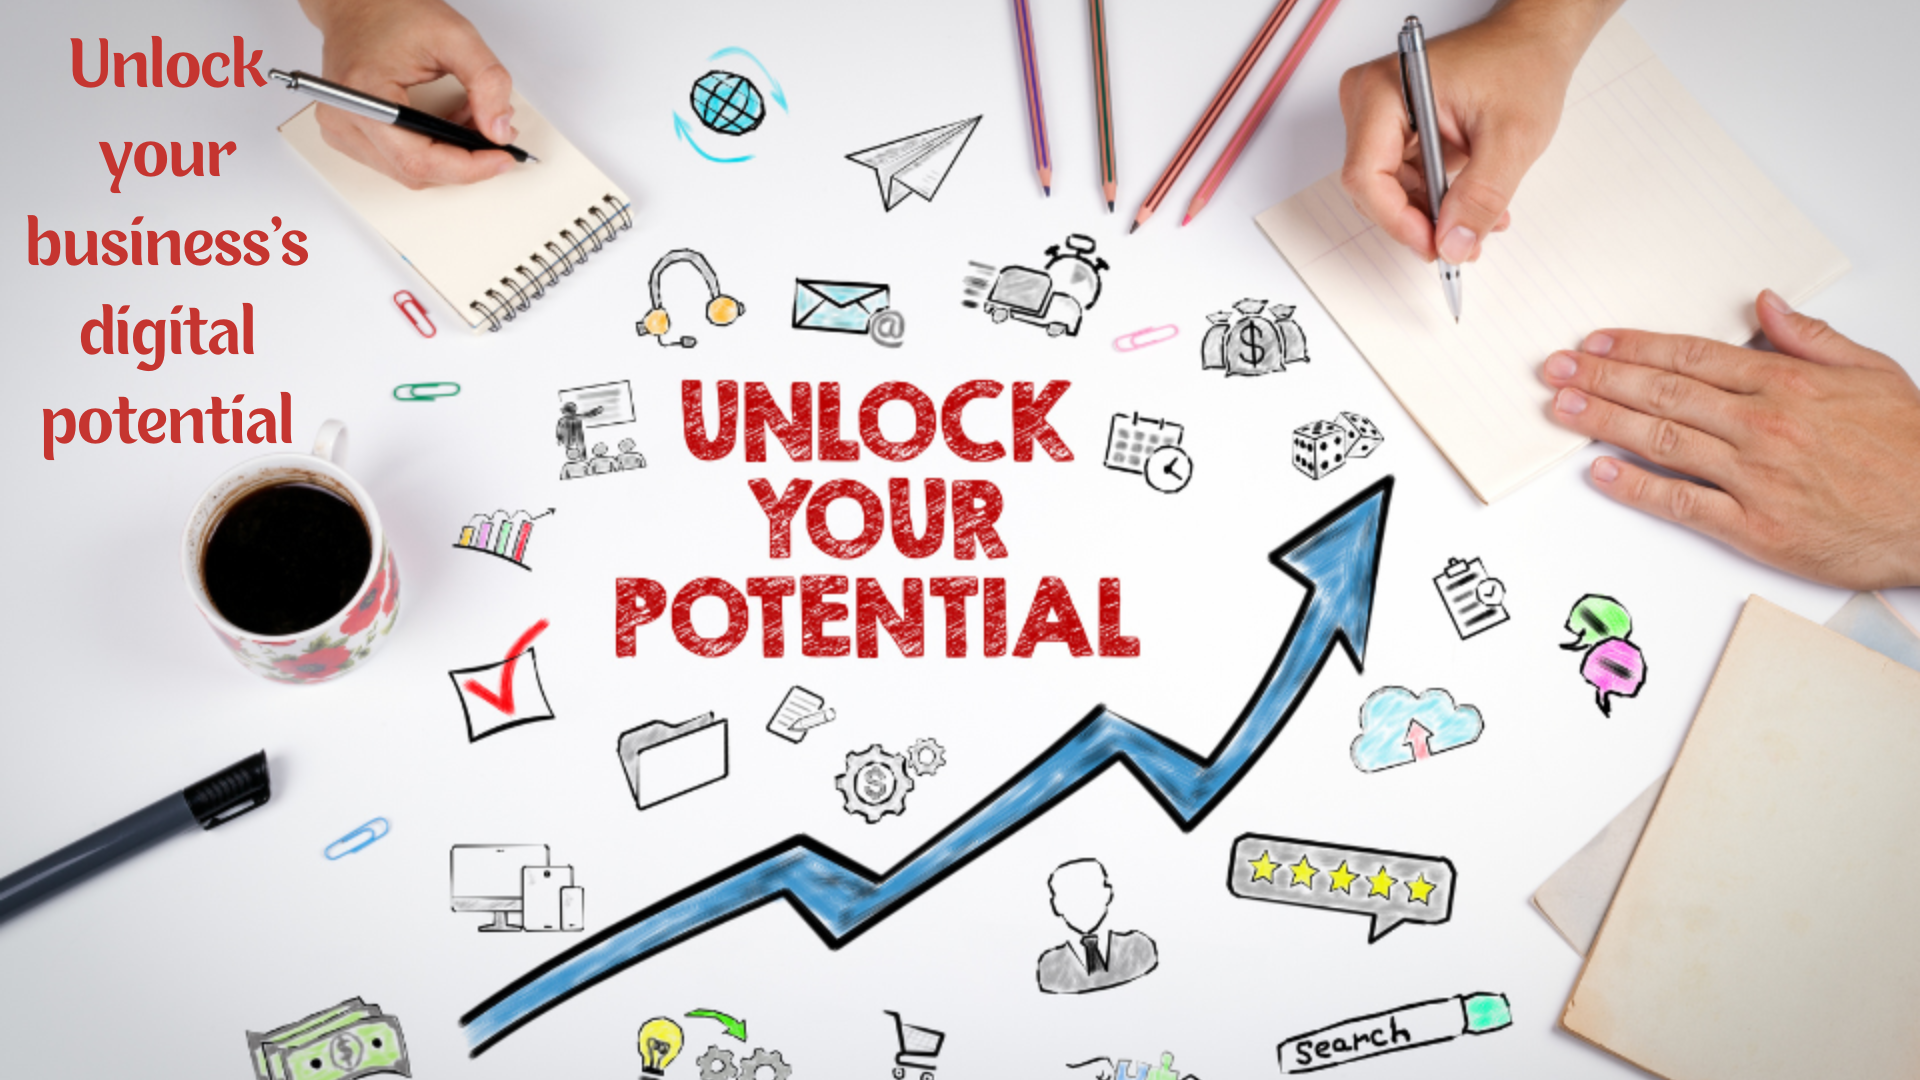 Unlock your business's digital potential. (1)